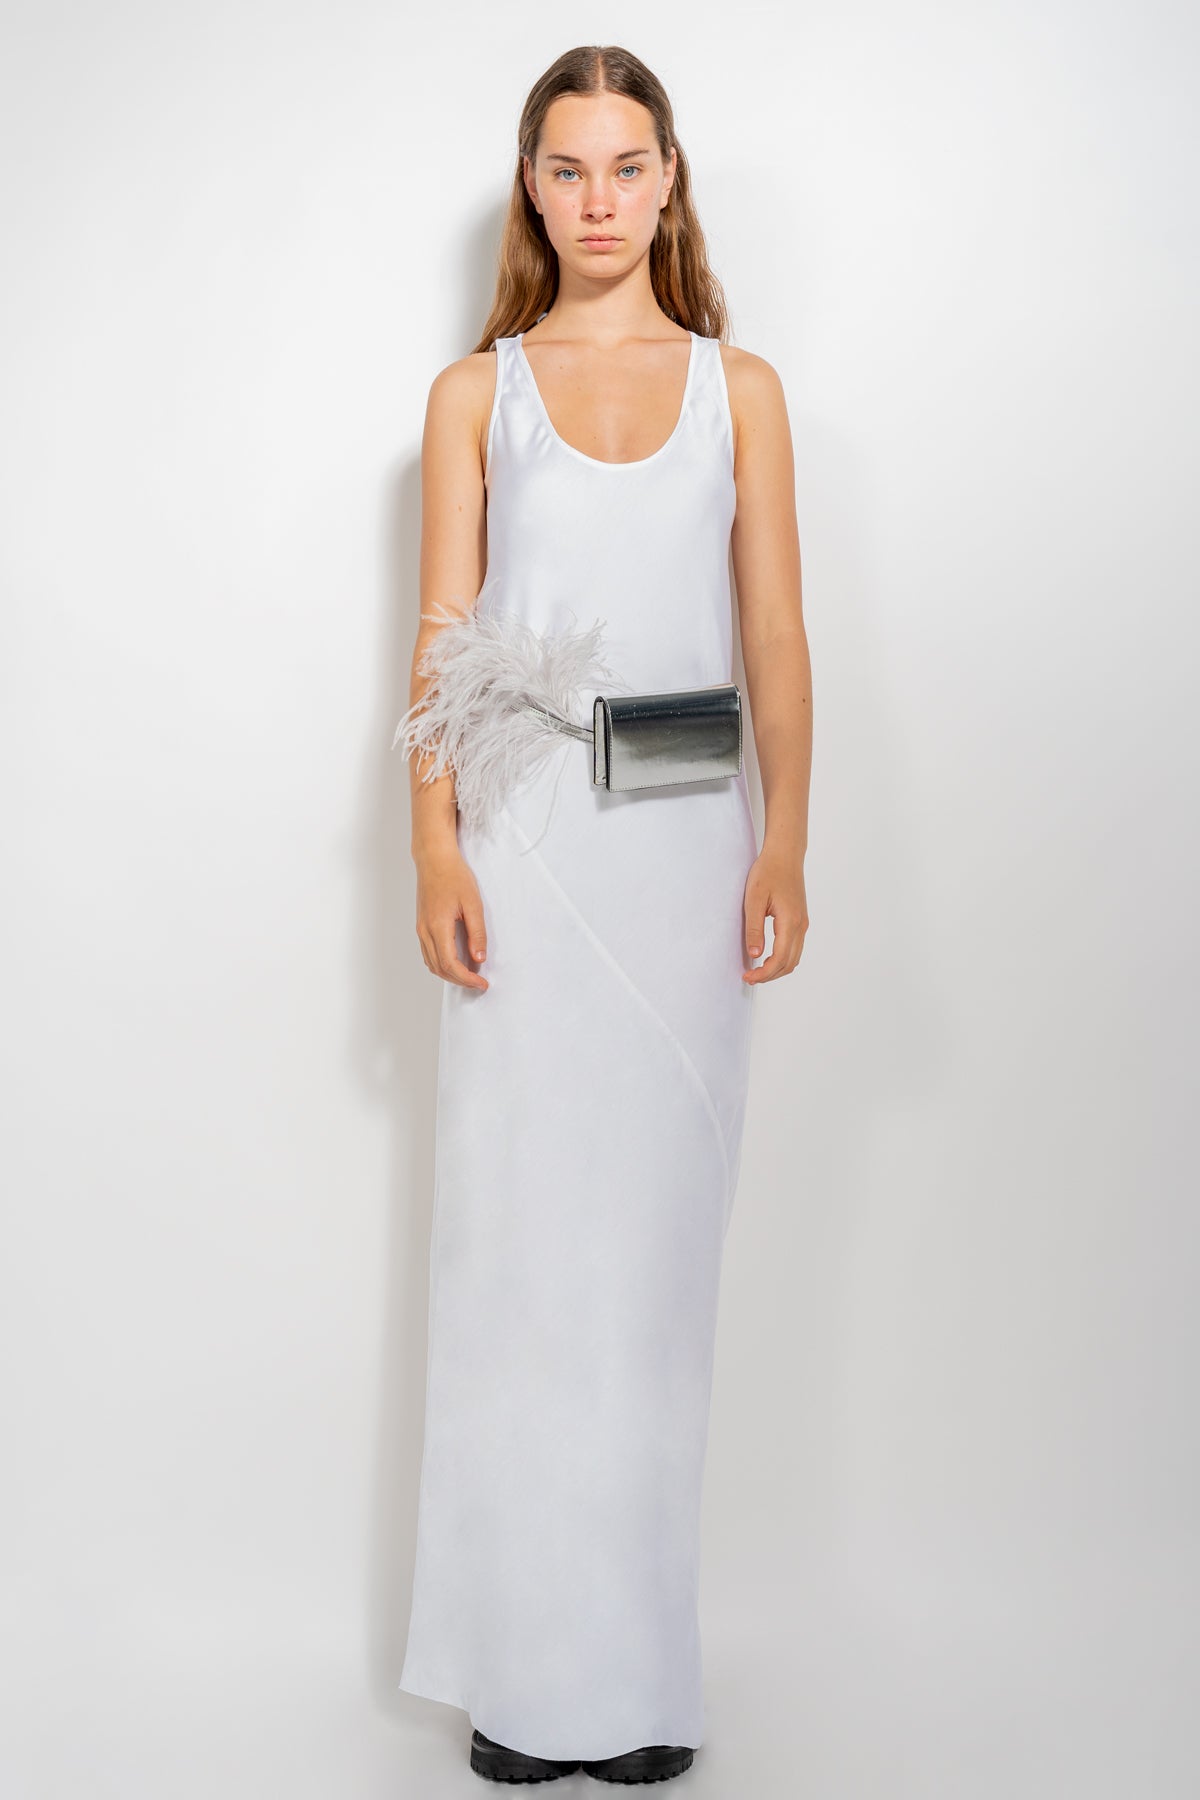 WHITE OPEN BACK LONG DRESS marques'almeida